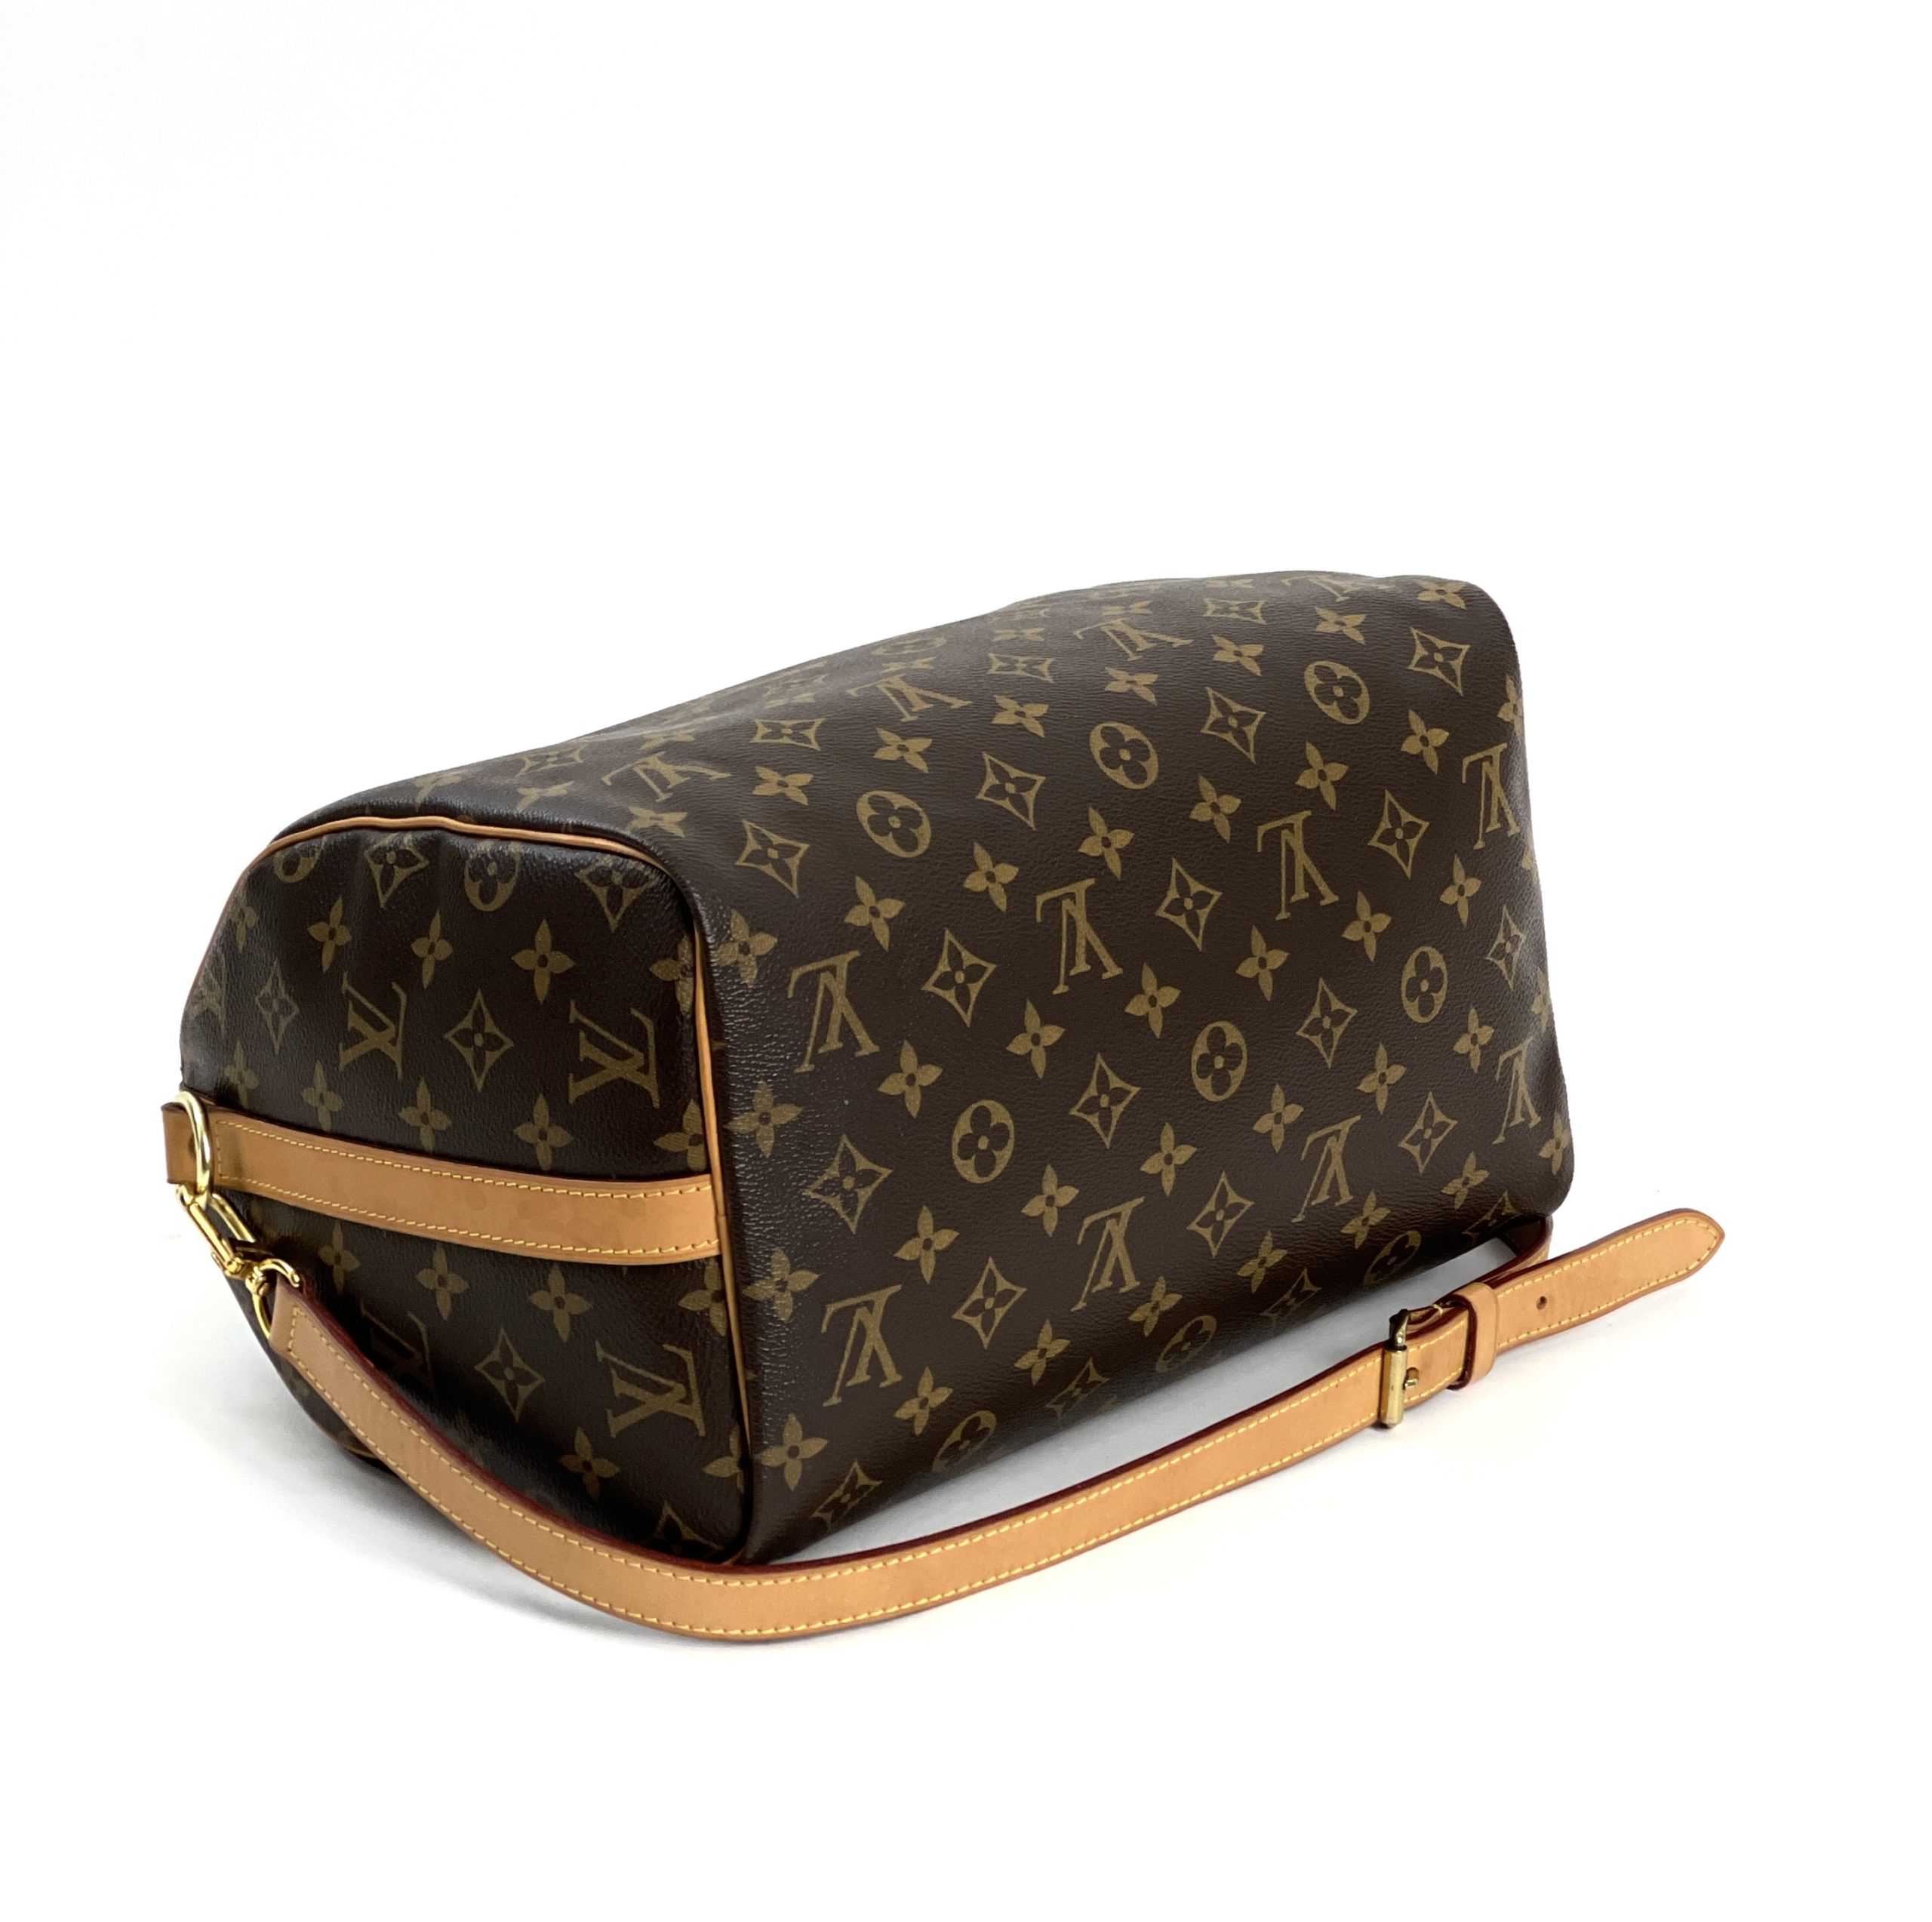 Designer Handbag Review: Louis Vuitton Neverfull MM vs. Louis Vuitton  Speedy Bandouliere 30